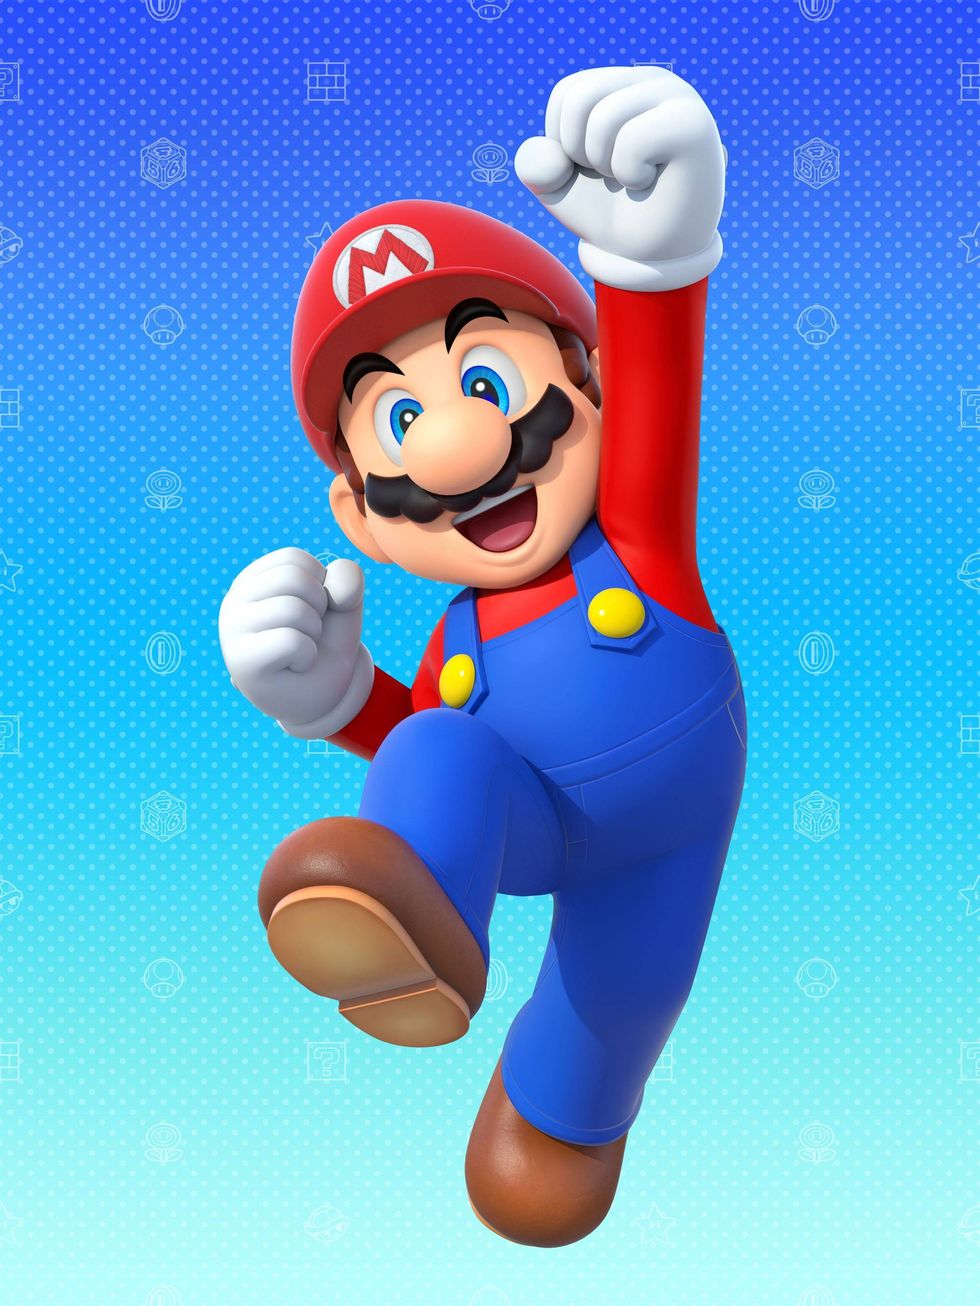 Finger, Mario, Animated cartoon, Animation, Playing sports, Celebrating, Fictional character, Pleased, Graphics, Illustration, 